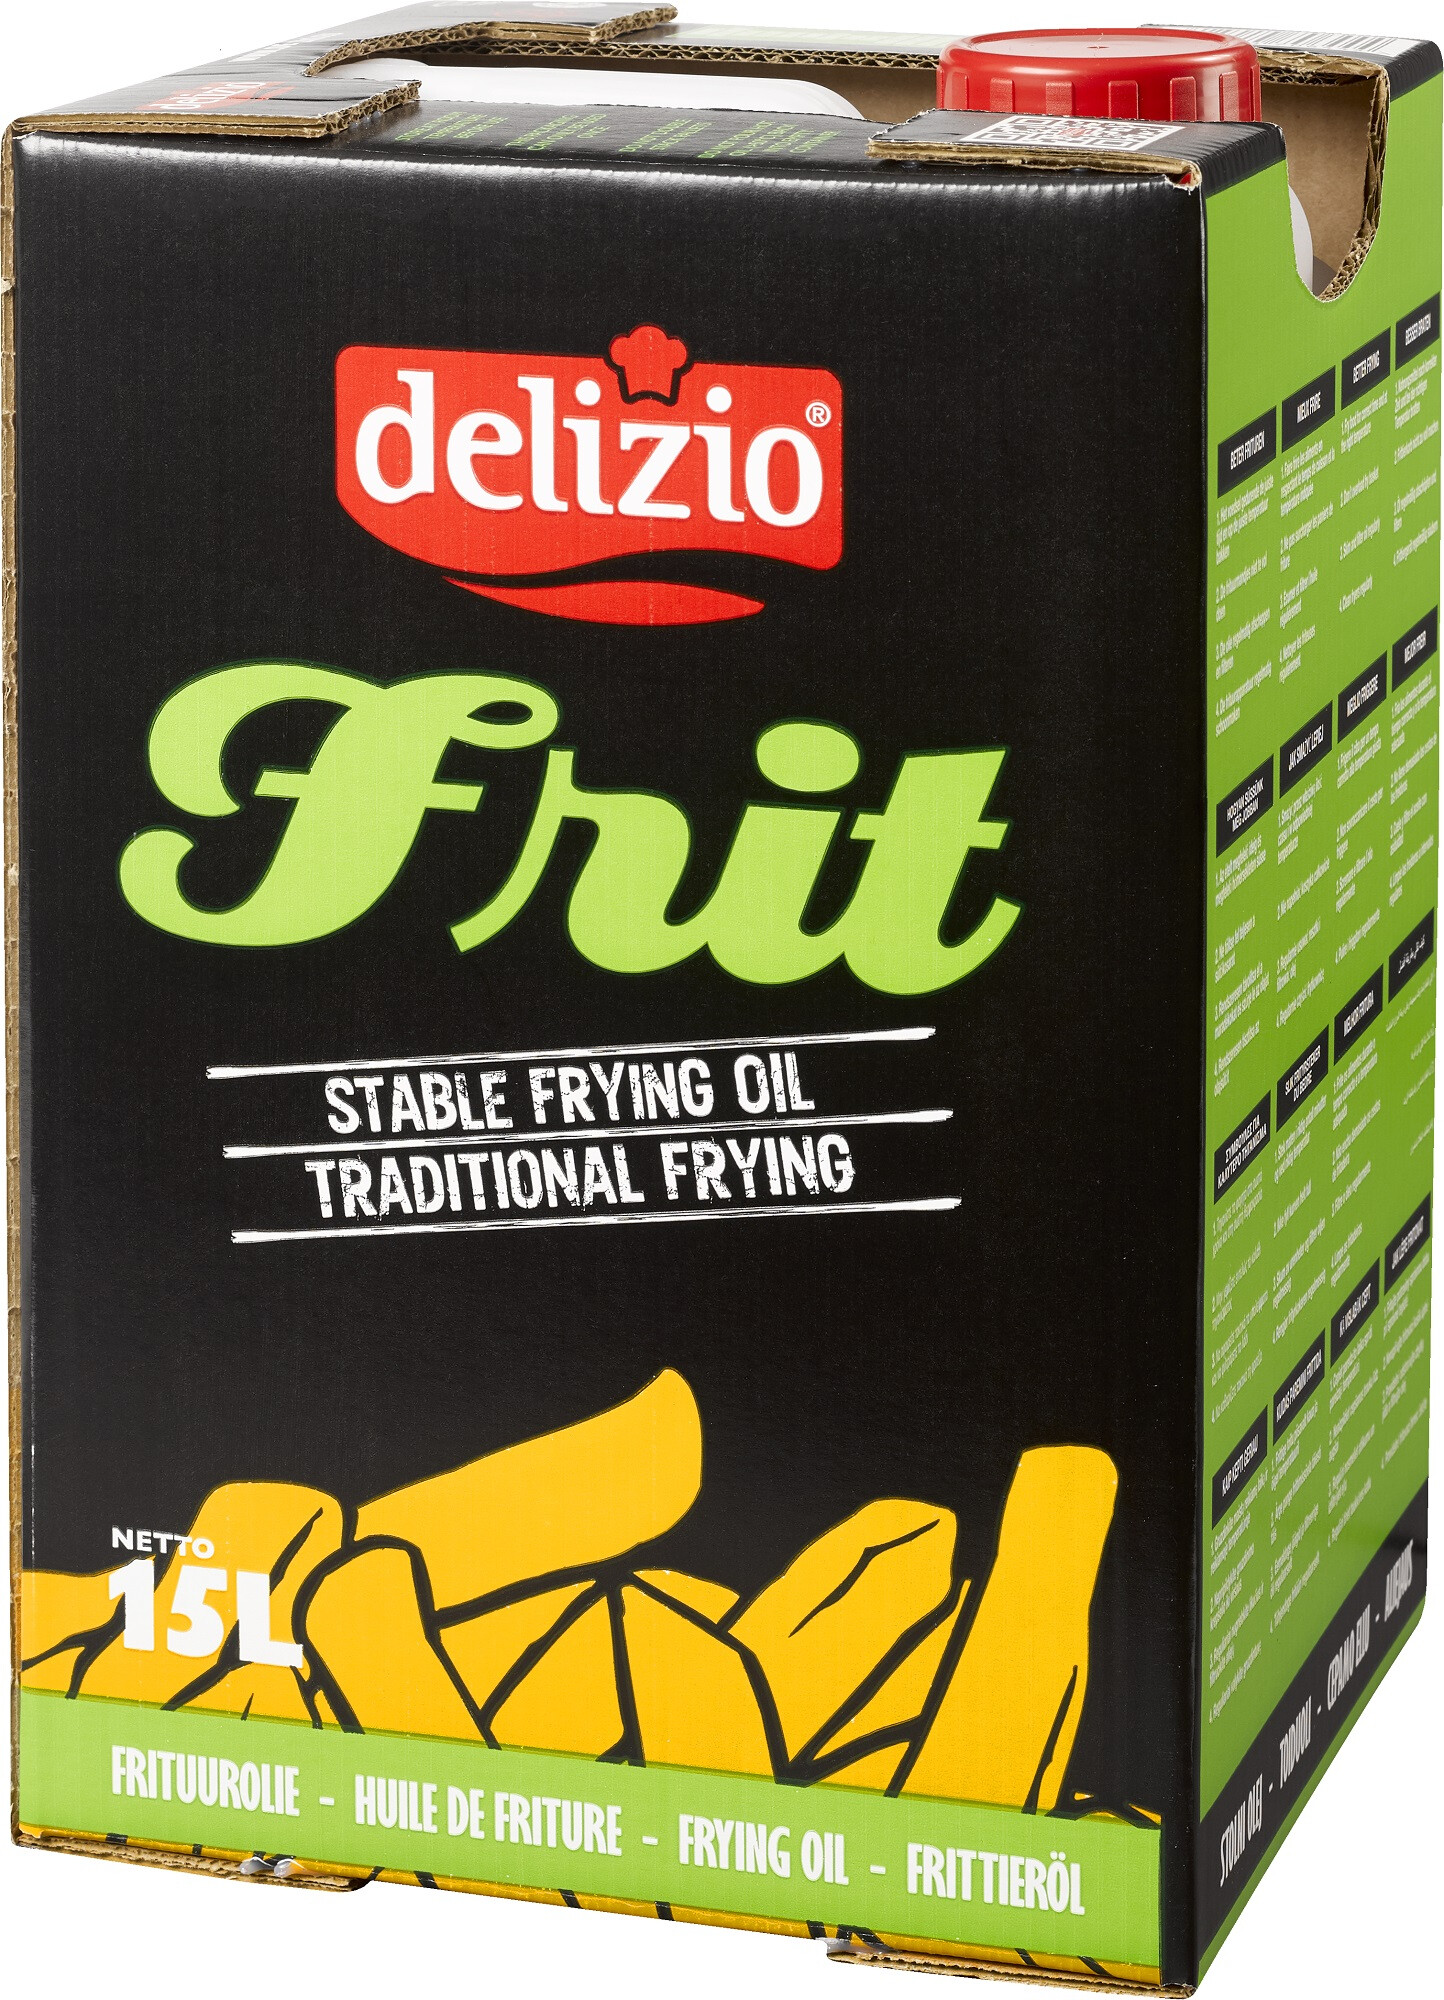 Delizio Frit Frying Oil 15L Can in Box